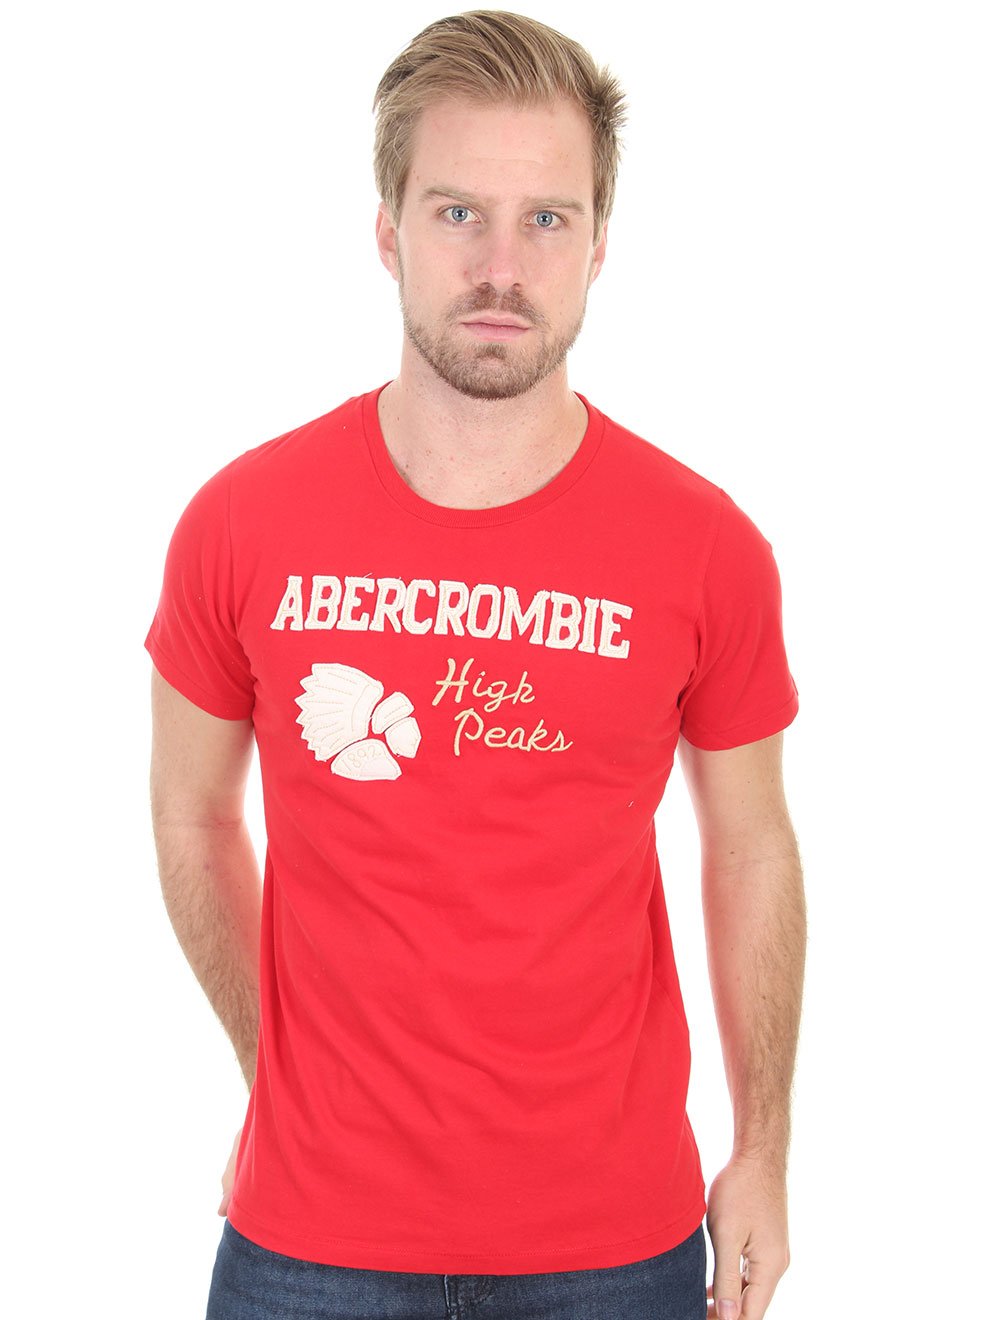 Camiseta Abercrombie Masculina Indian High Peaks Vermelha